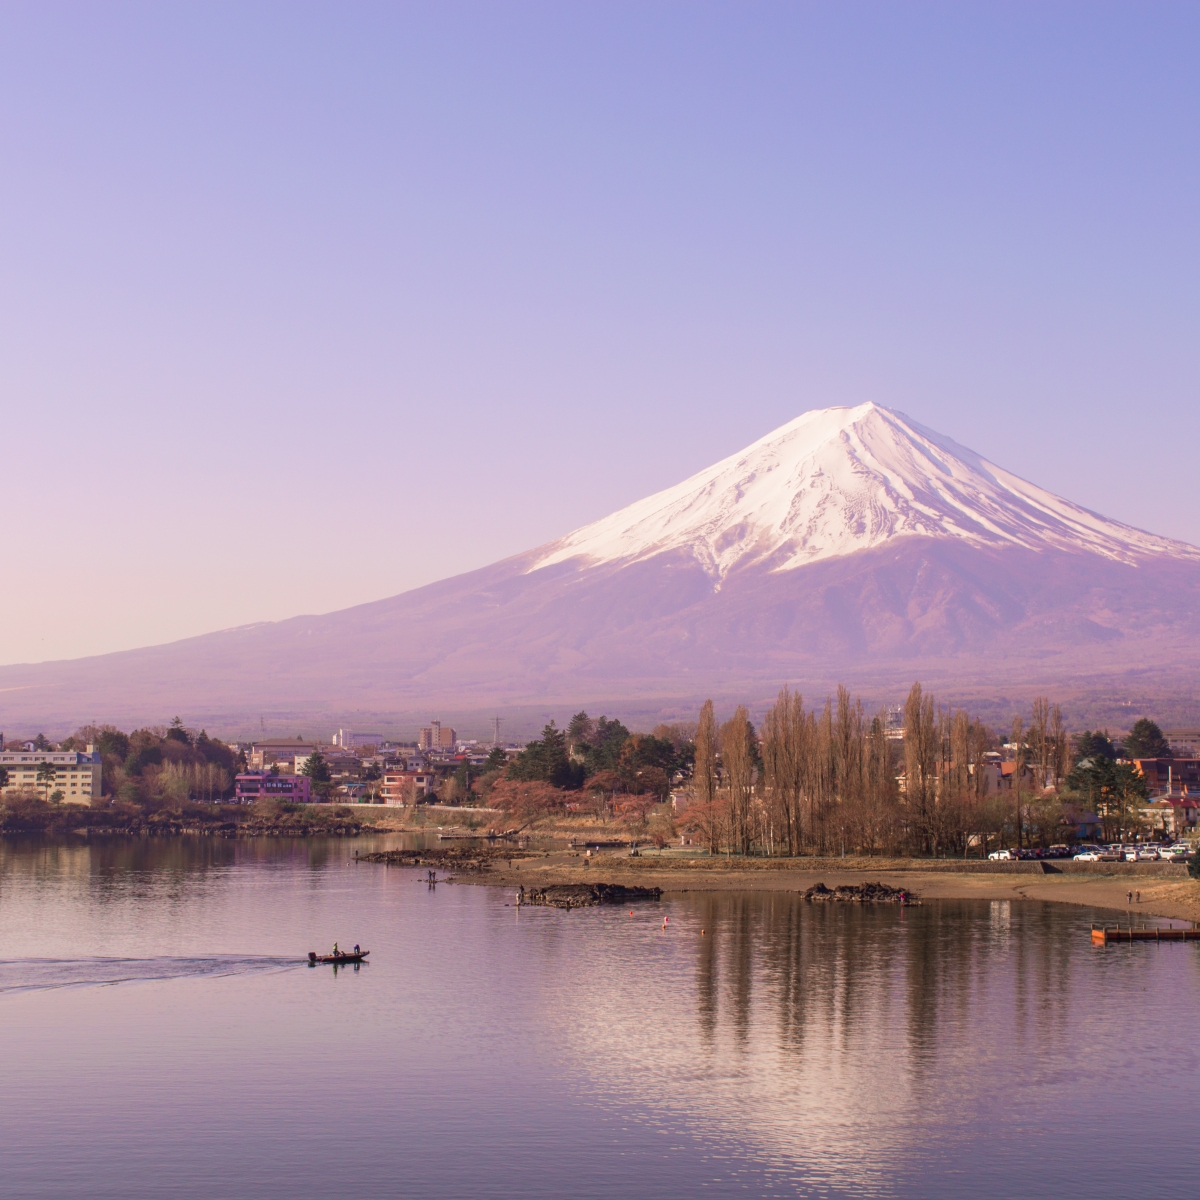 Enjoy Mount Fuji on a road trip!